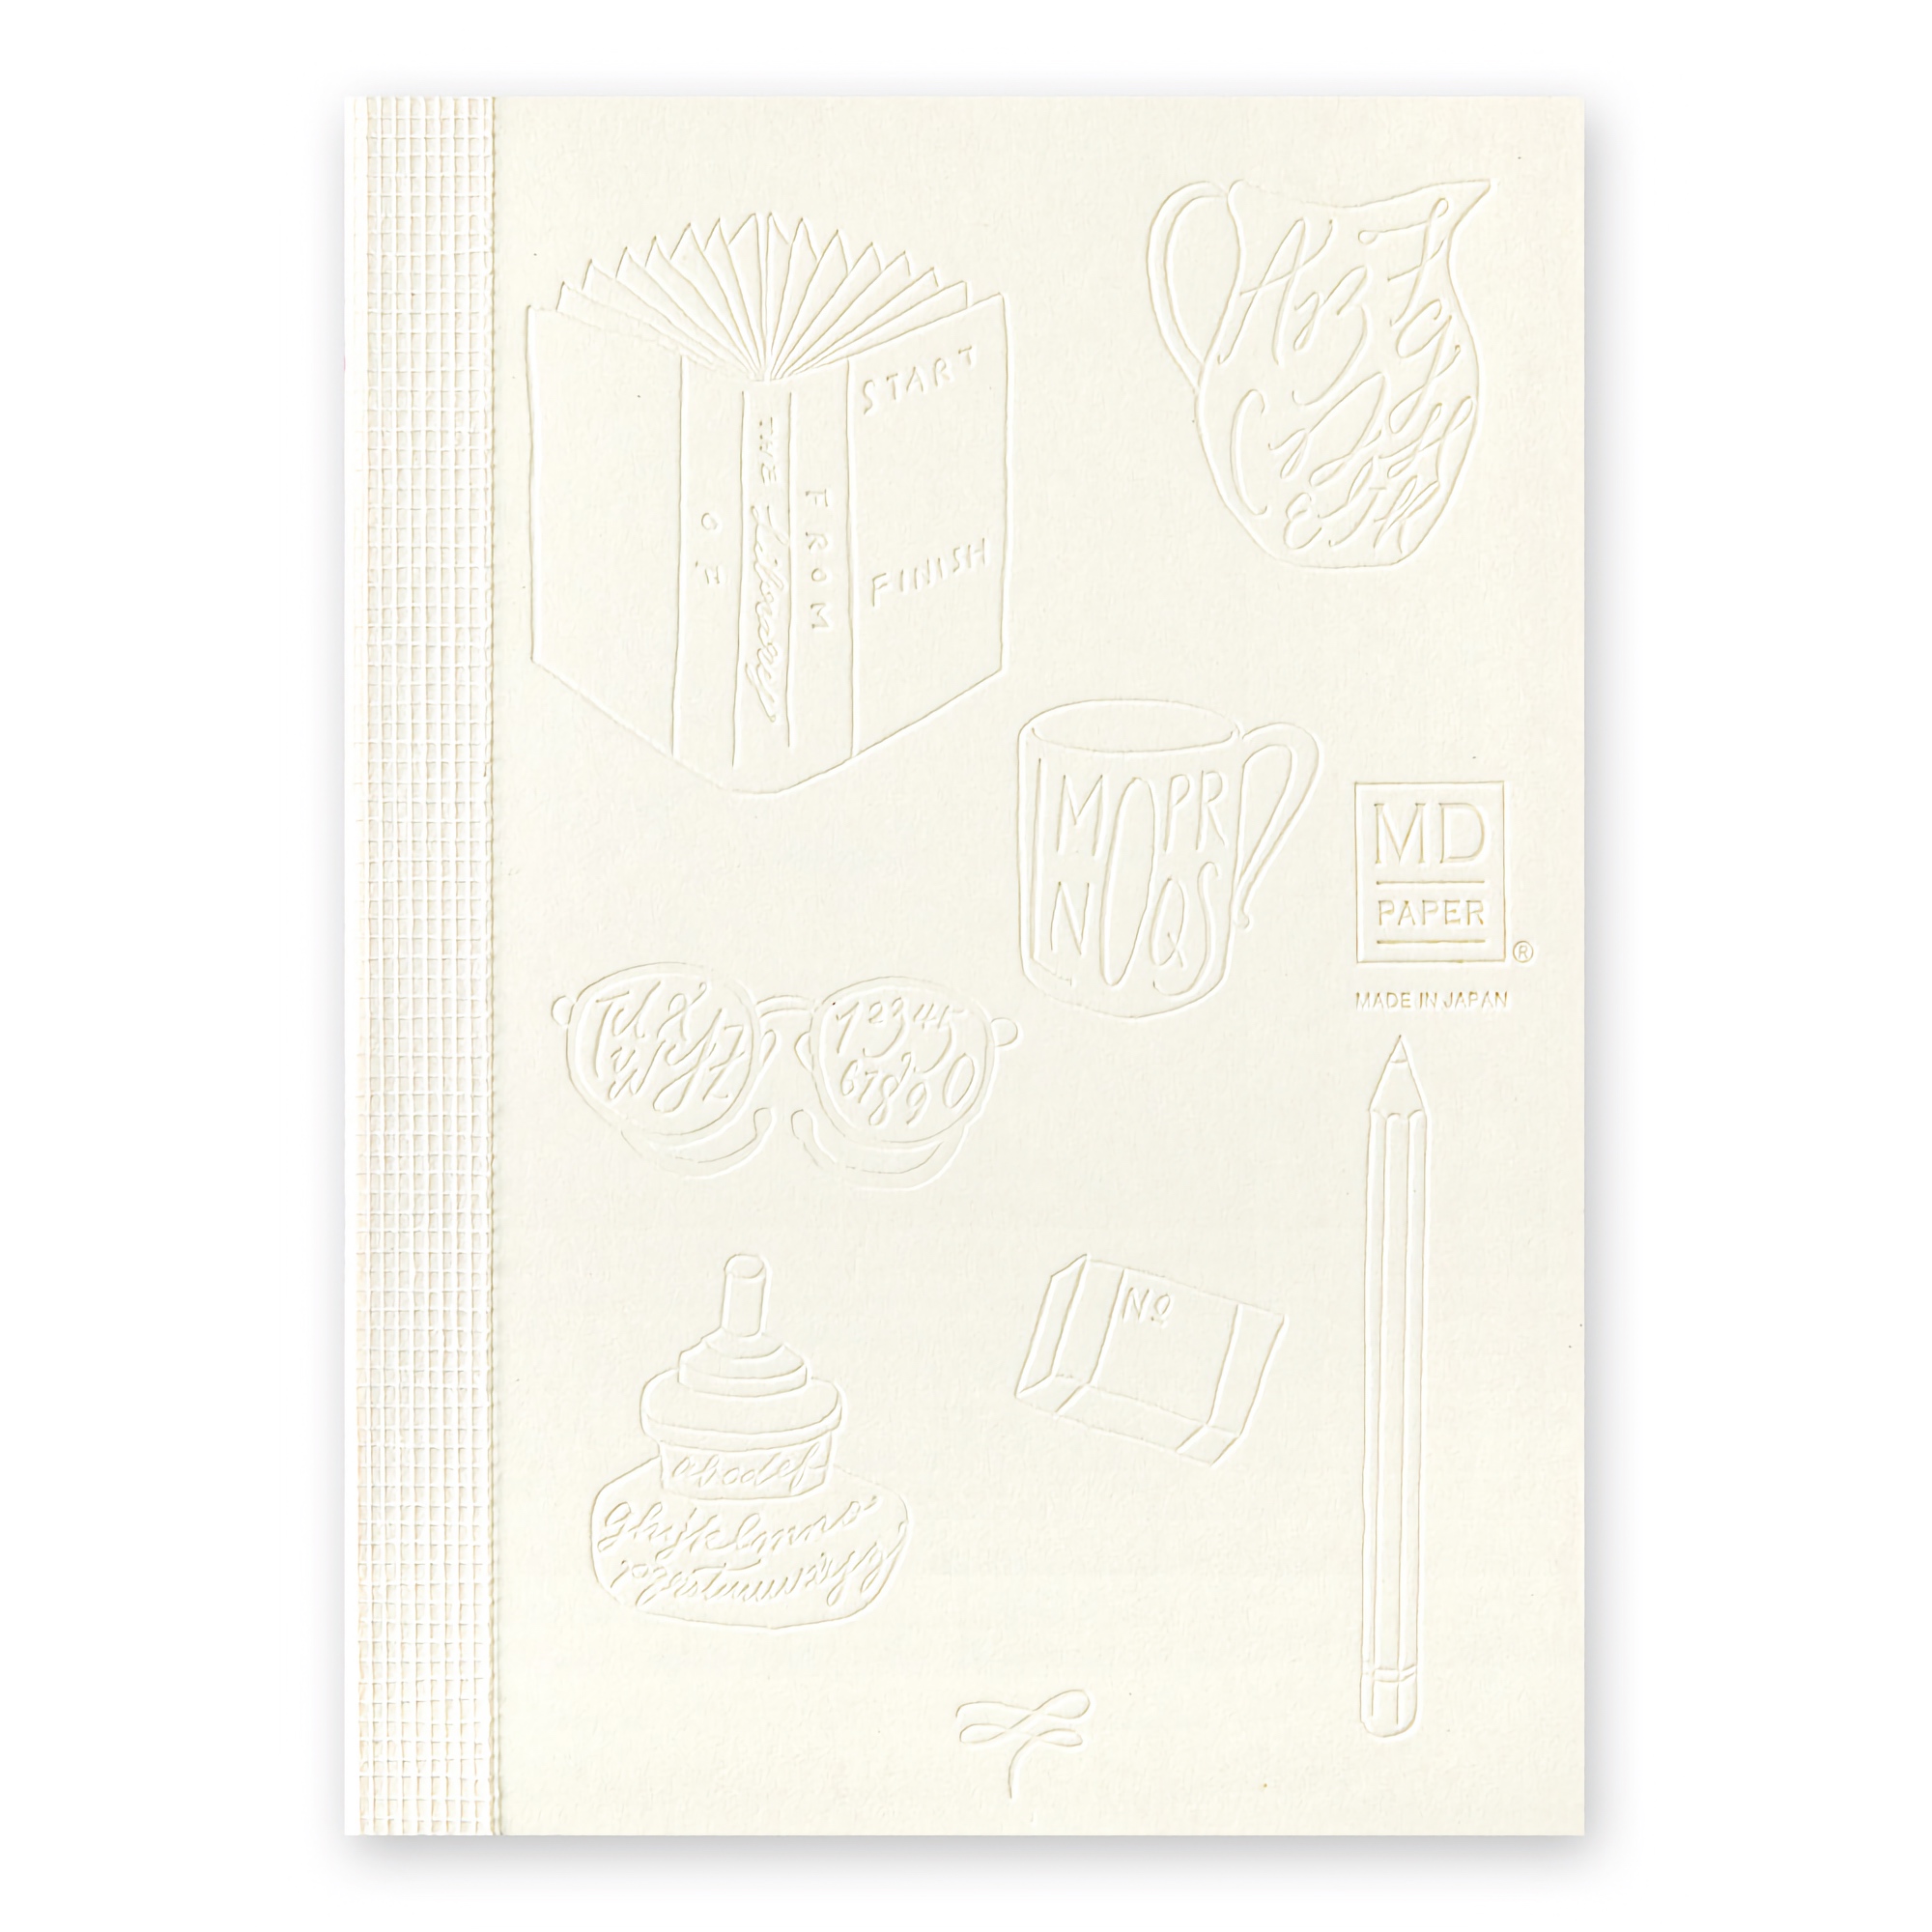 Midori MD Notebook [A6] Blank Artist Collaboration Mikiko Amemiya 15th Anniversary [Limited Edition]